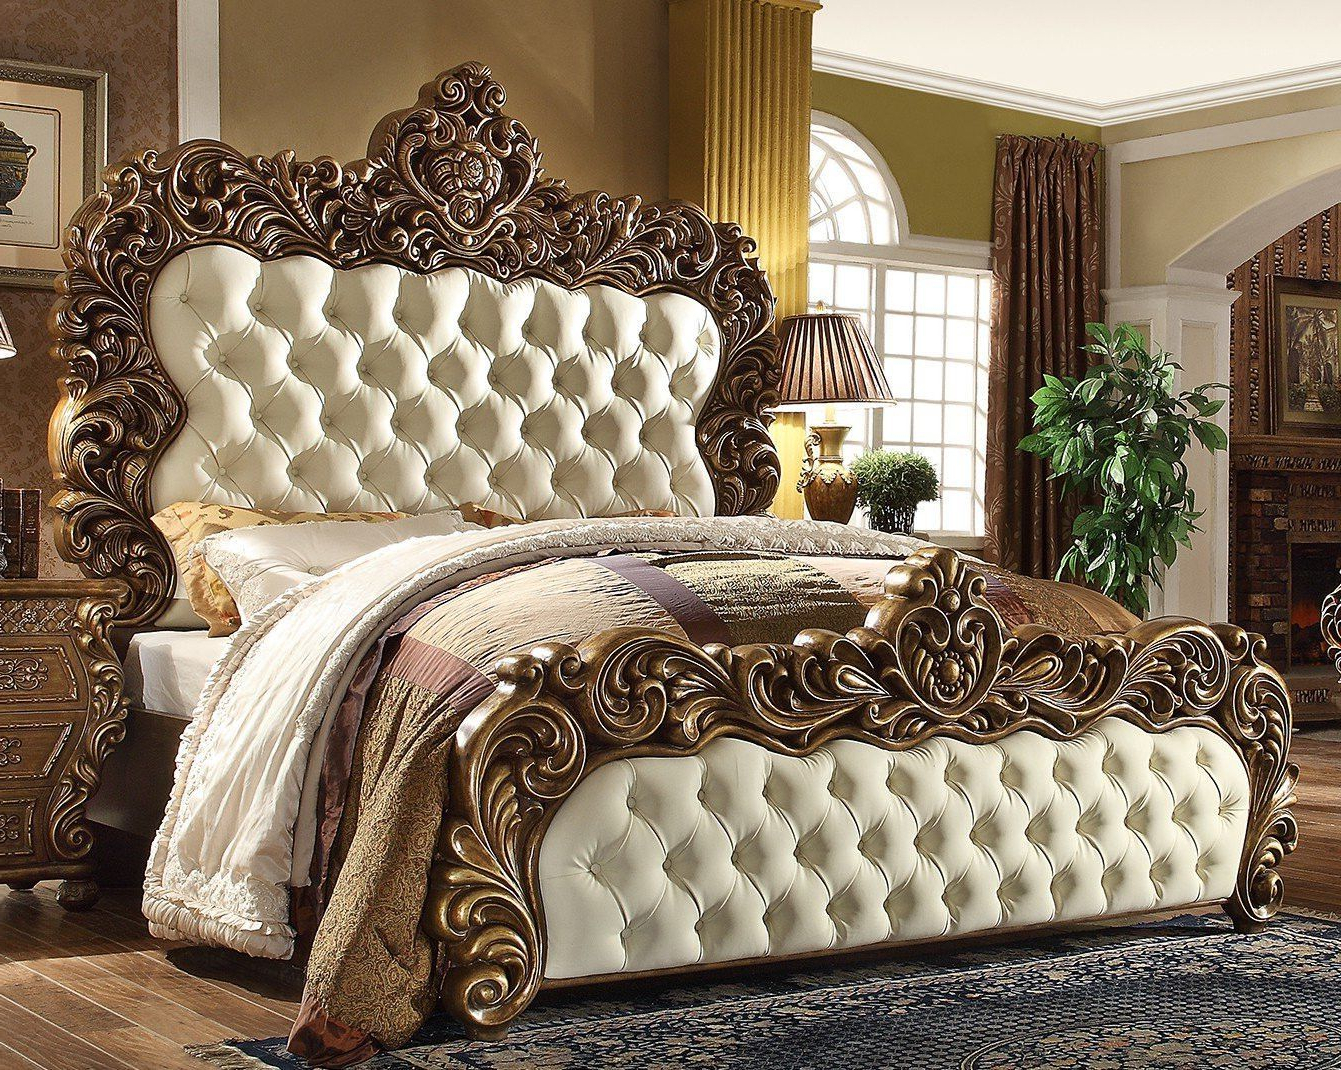 Homey Design Eastern King Bed Hd 8011 Description Rich